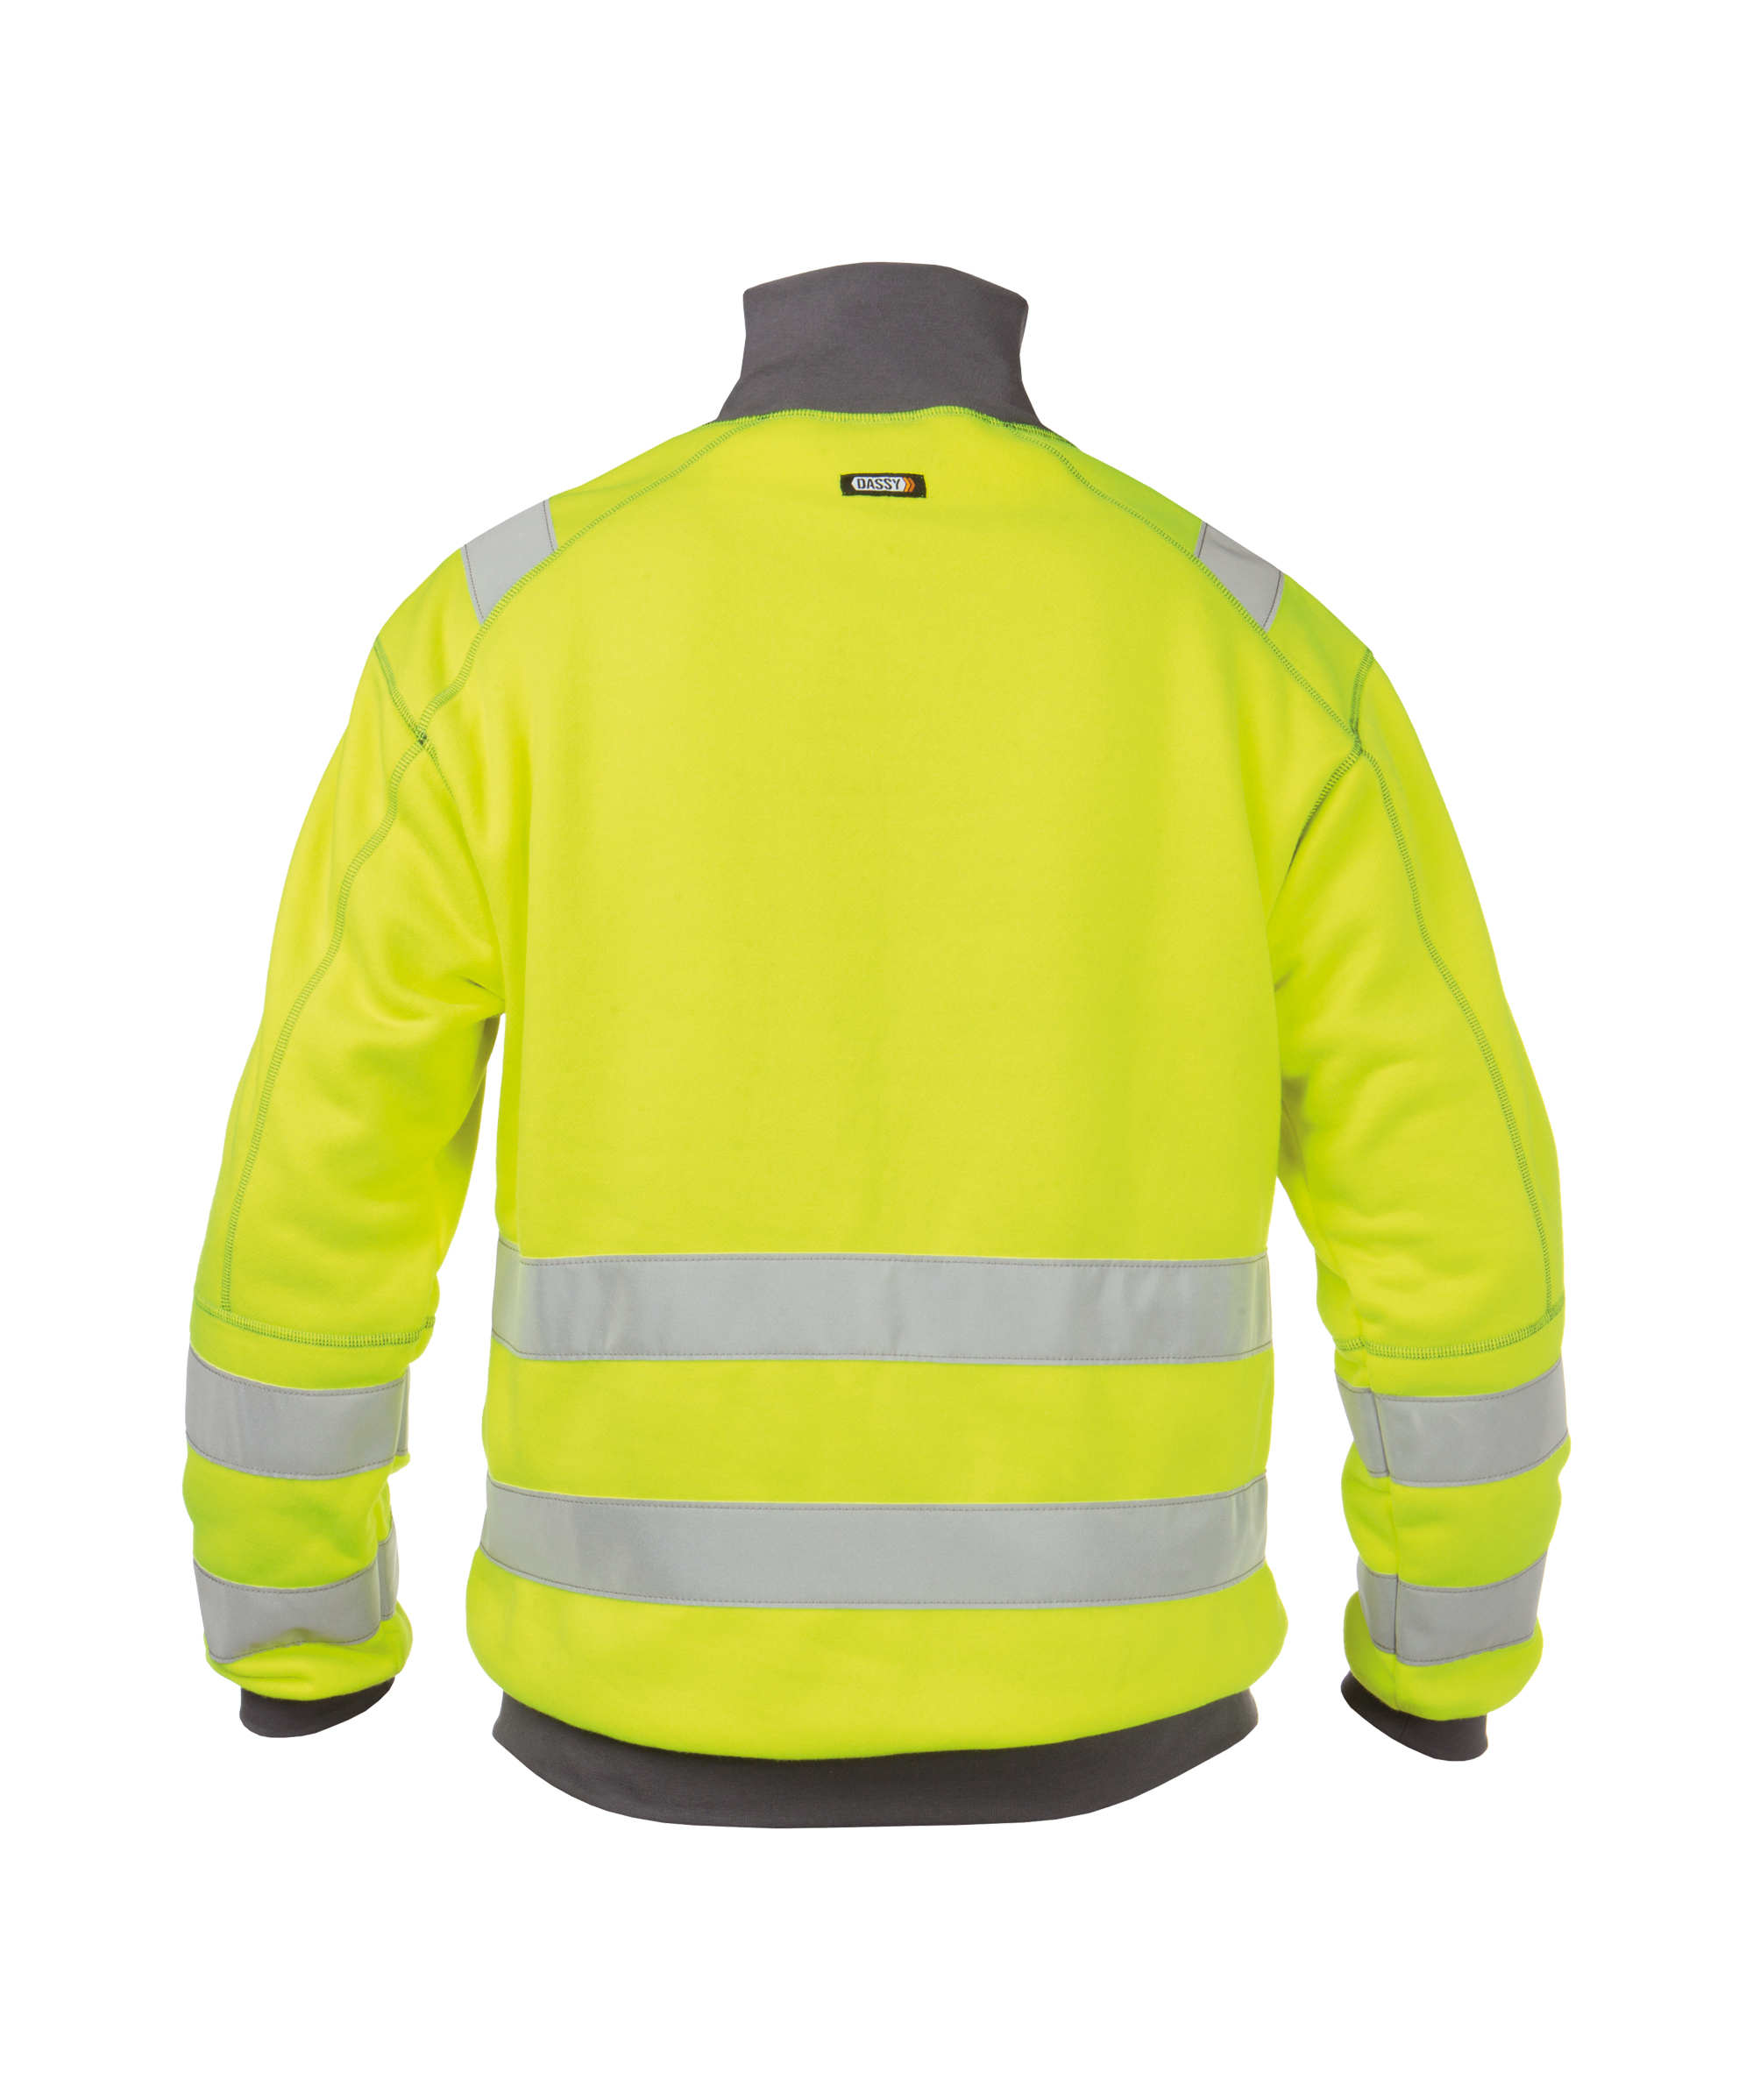 denver_high-visibility-sweatshirt_fluo-yellow-cement-grey_back.jpg